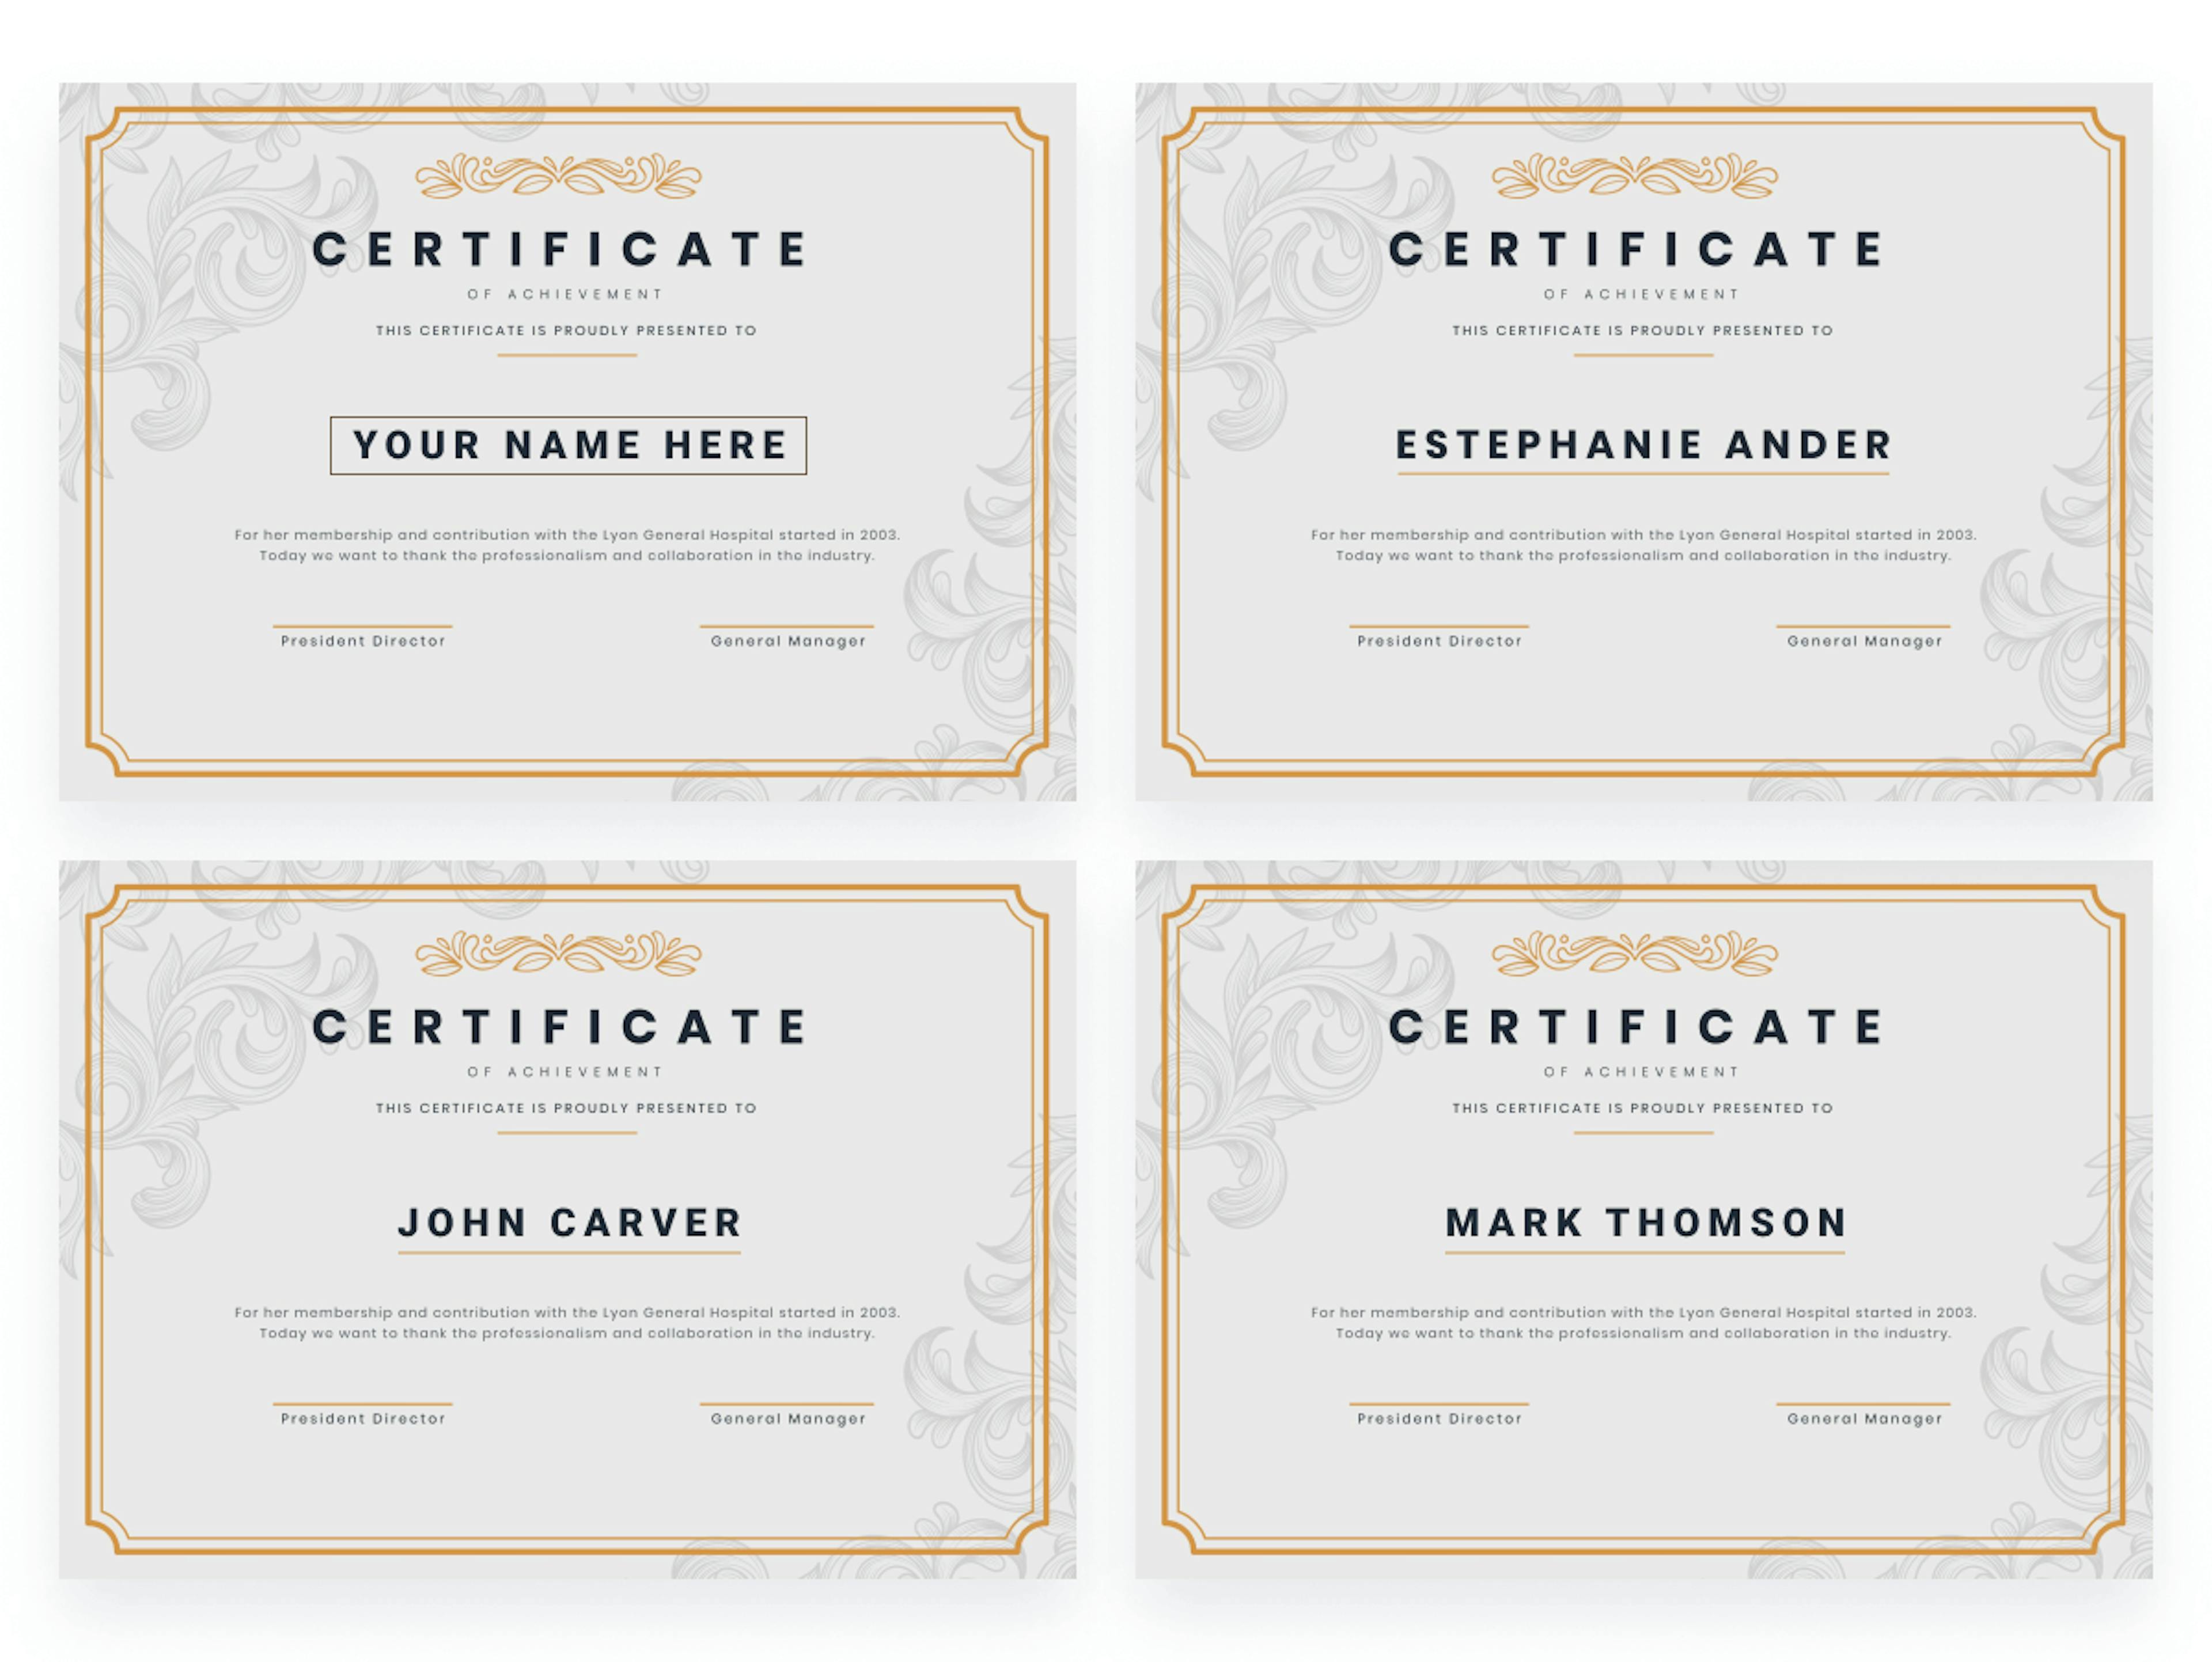 Generate personalized certificates